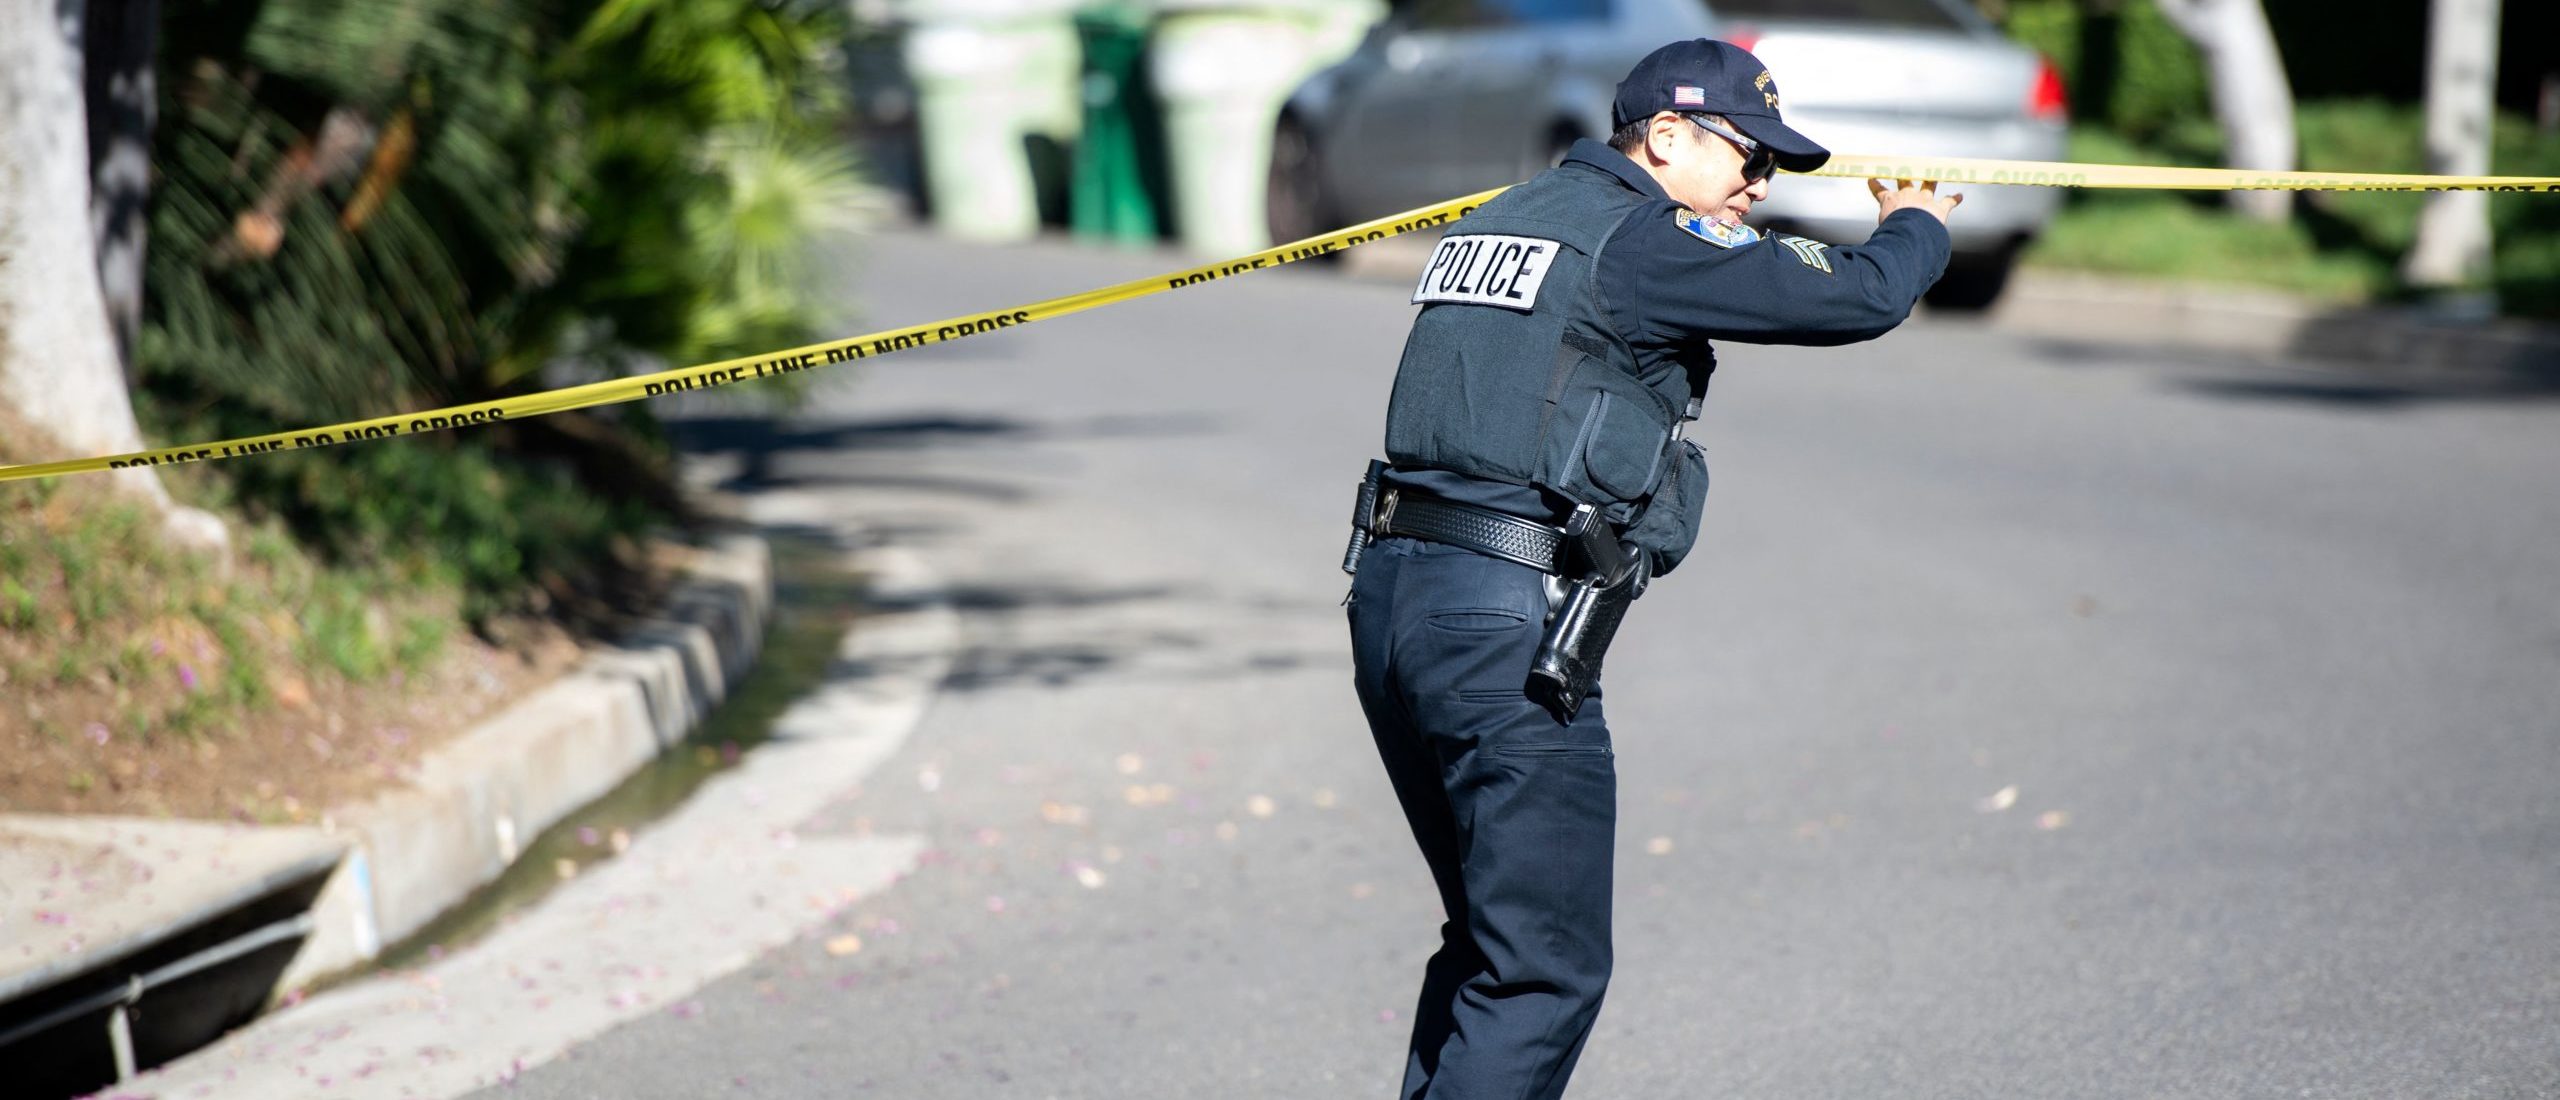 Multiple People Shot In Peck Park, Los Angeles. LAPD Declares Citywide Tactical Alert